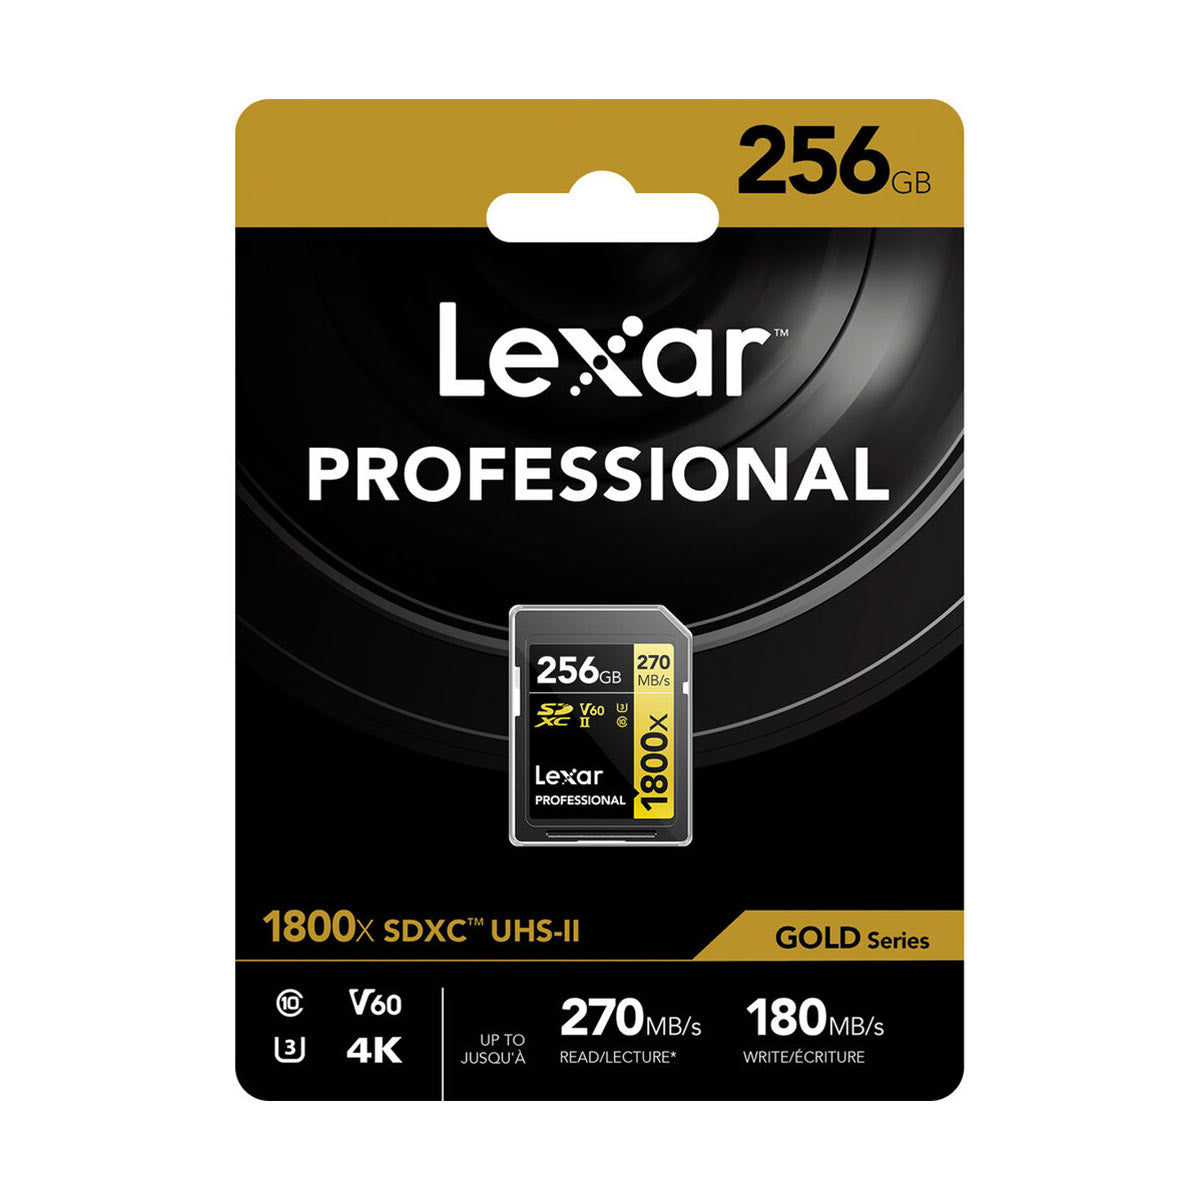 Lexar 256GB Professional 1800x UHS-II SDXC (V60) Memory Card